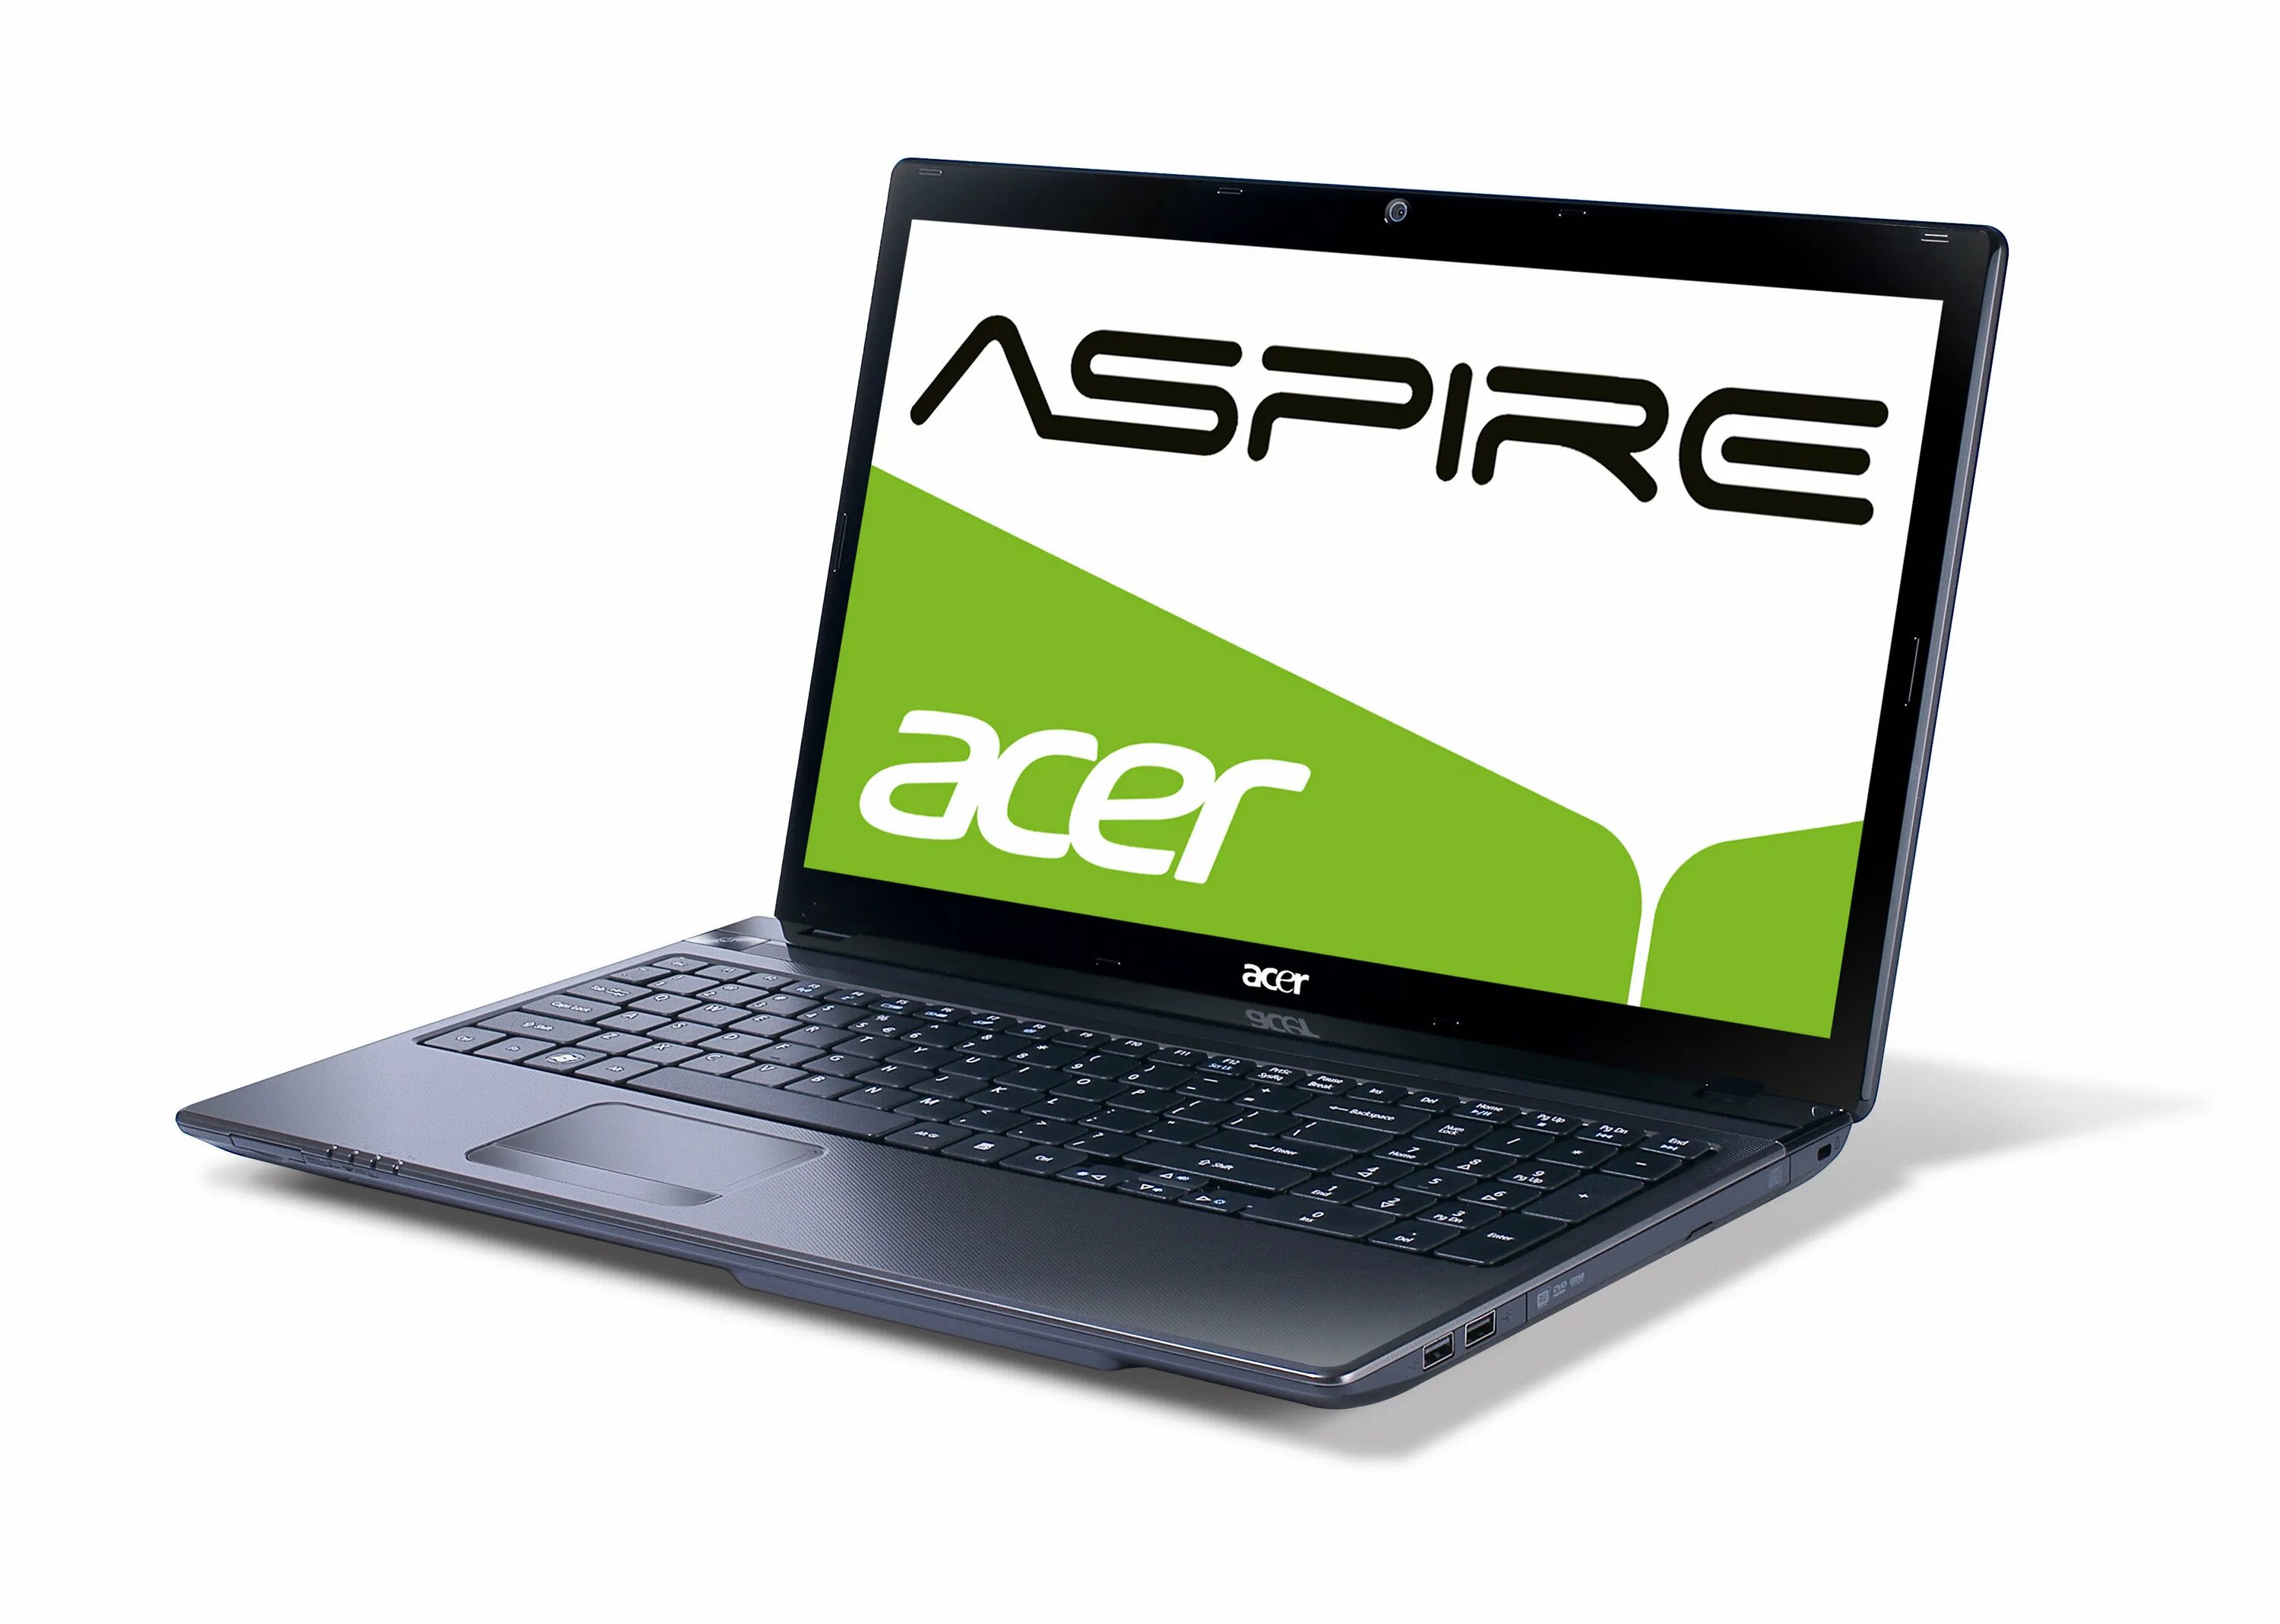 Acer 5750g. Асер Aspire 5750g. Ноутбуки Acer ноутбук Acer Aspire 5750g. Acer Aspire 5750g-32354g32mnkk. Асер aspire драйвера